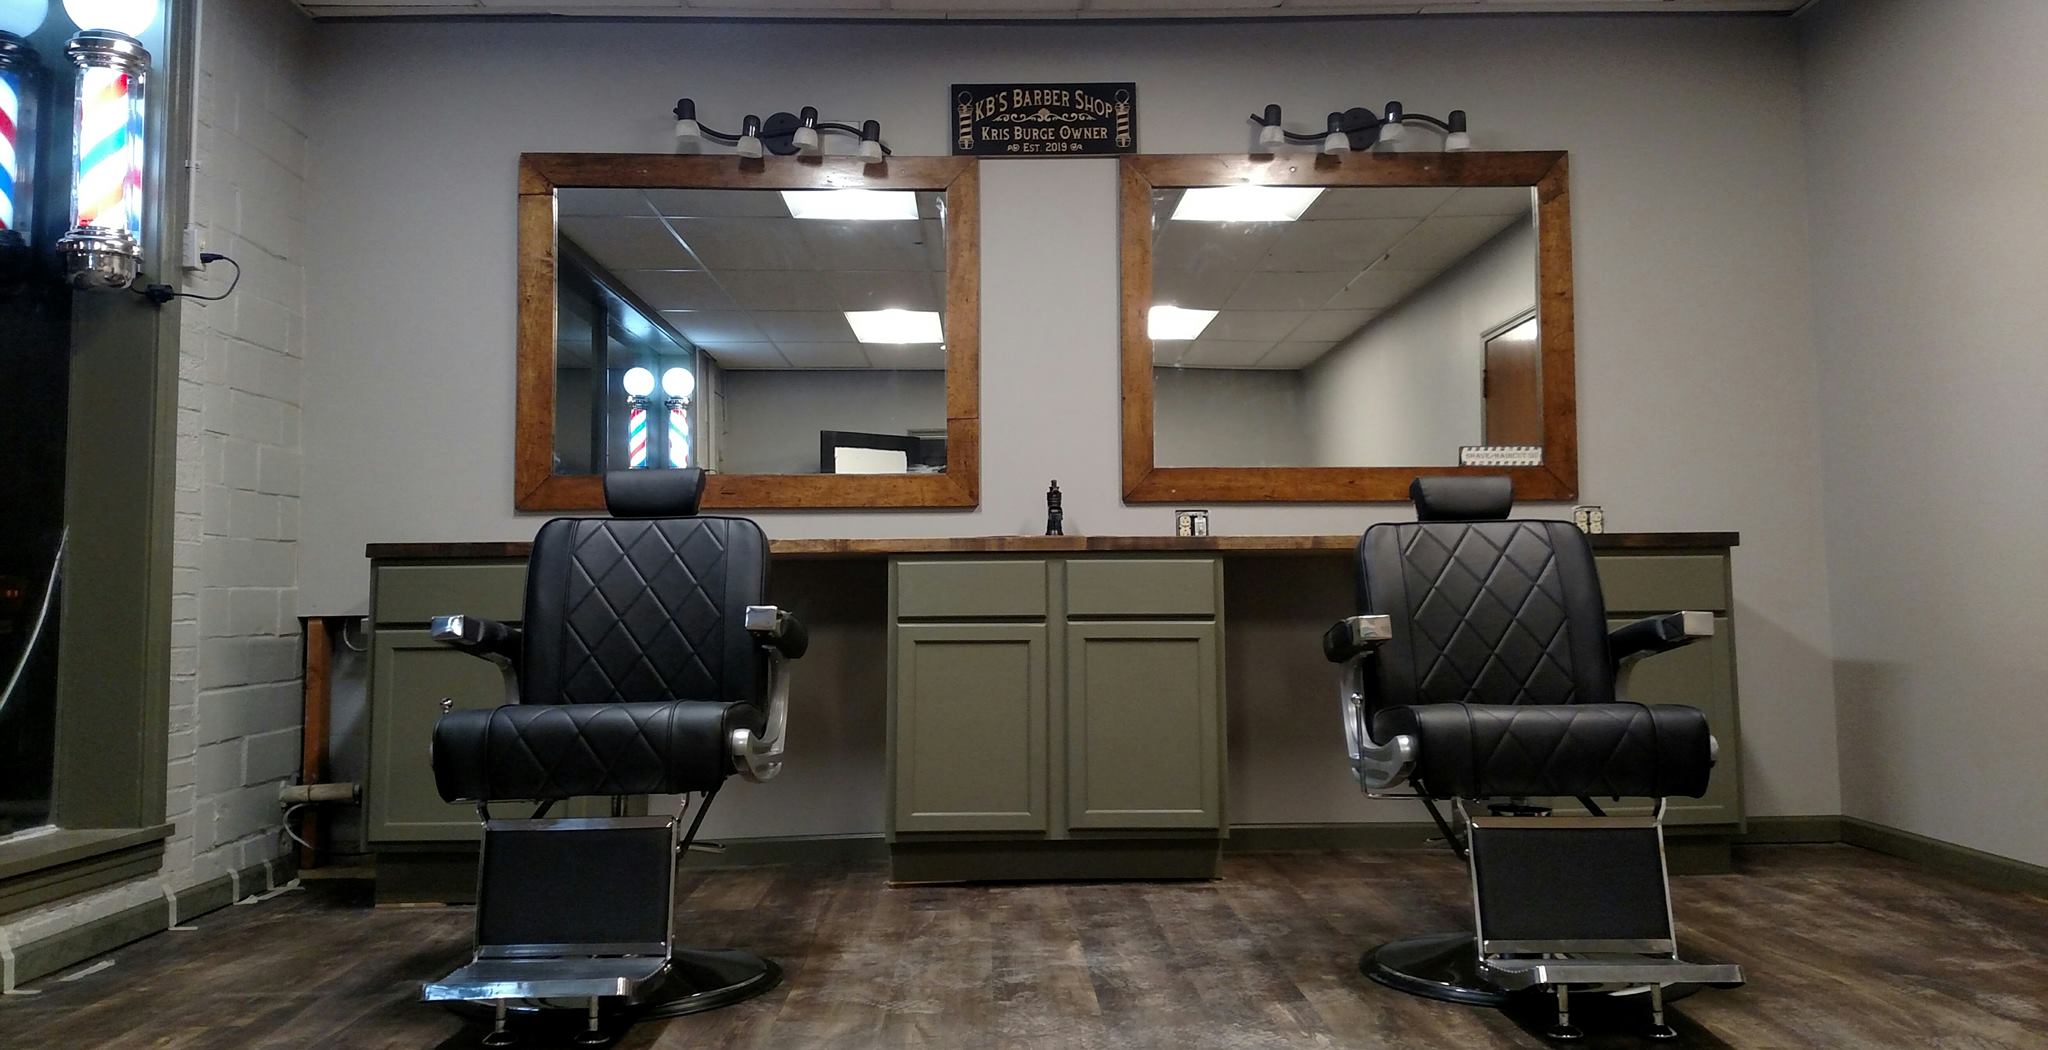 KBs Barbershop 1011 W Kansas Ave, McPherson Kansas 67460